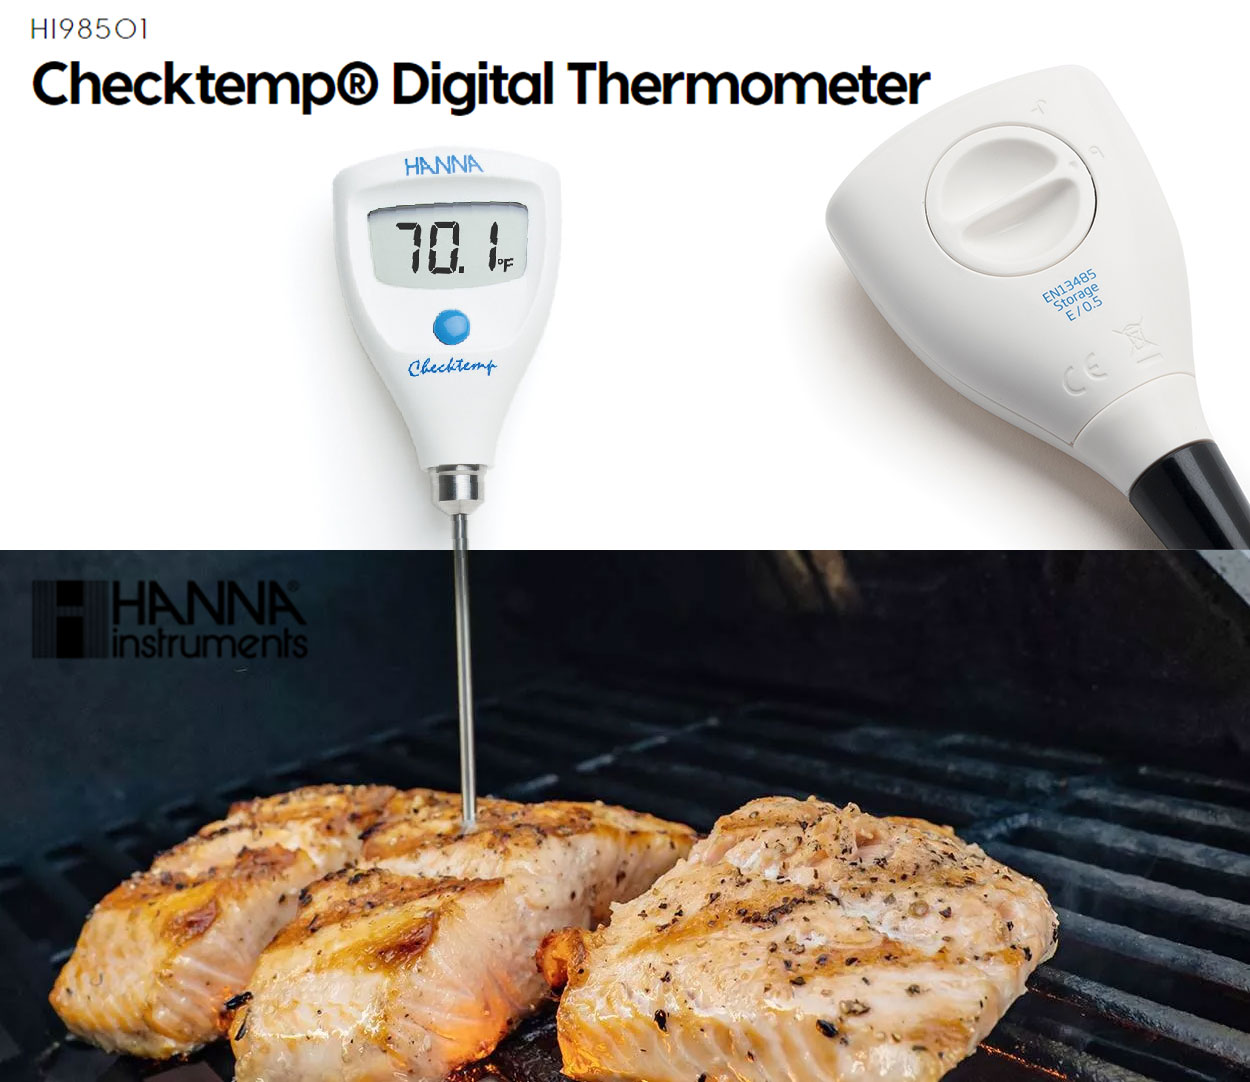 https://www.seeanco.com/wp-content/uploads/HI98501-Checktemp-Digital-Thermometer.jpg